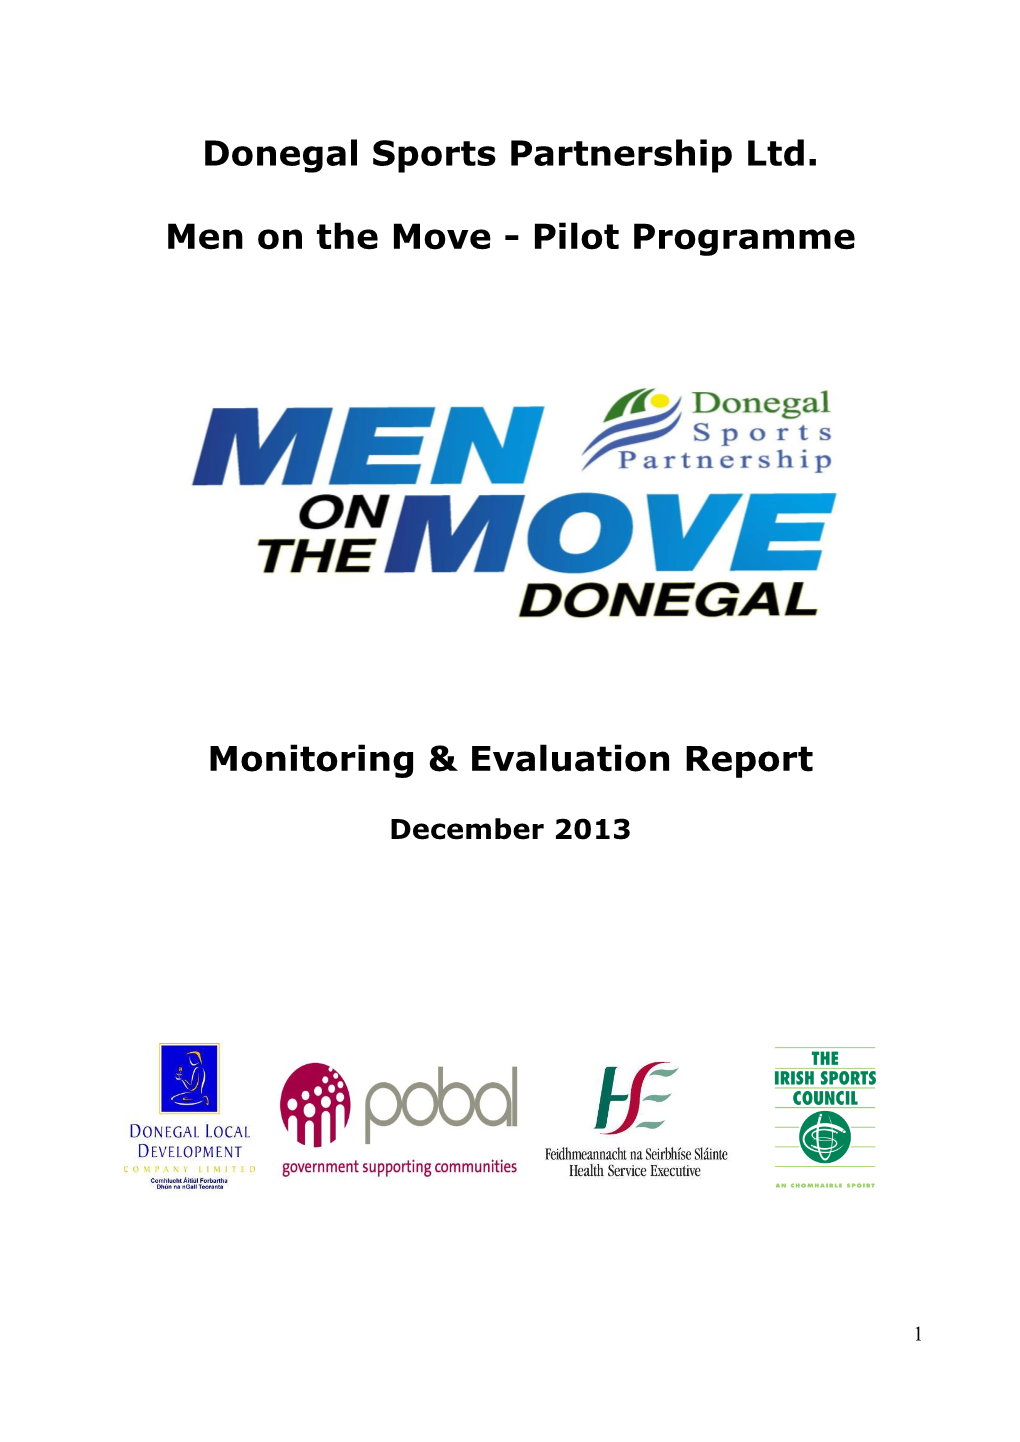 Men on the Move - Pilot Programme